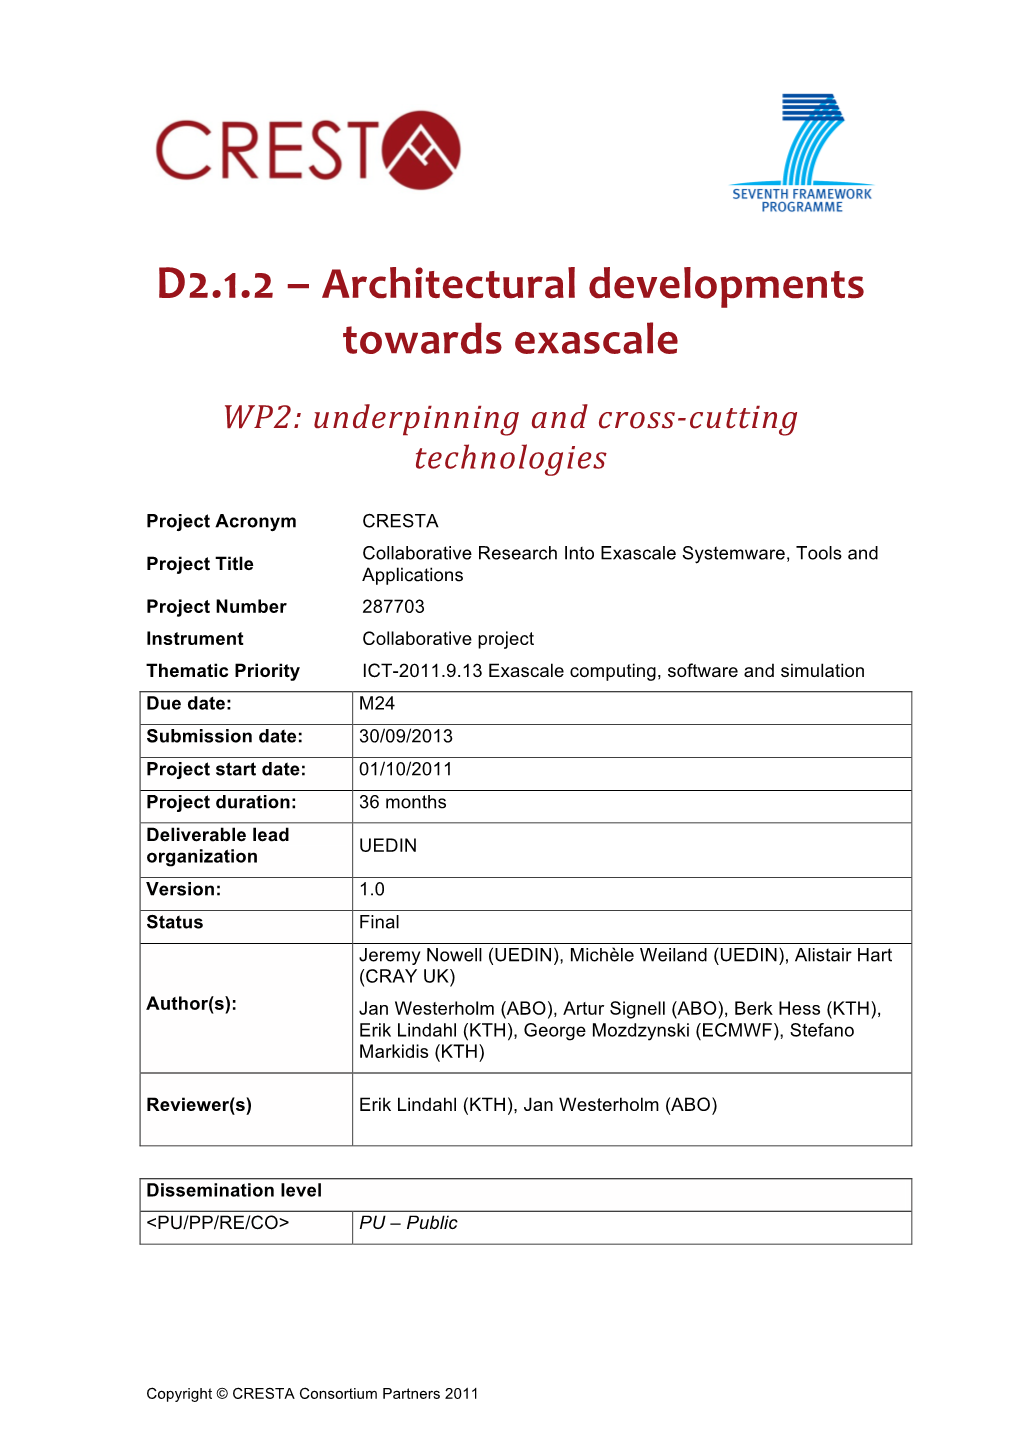 D2.1.2 – Architectural Developments Towards Exascale